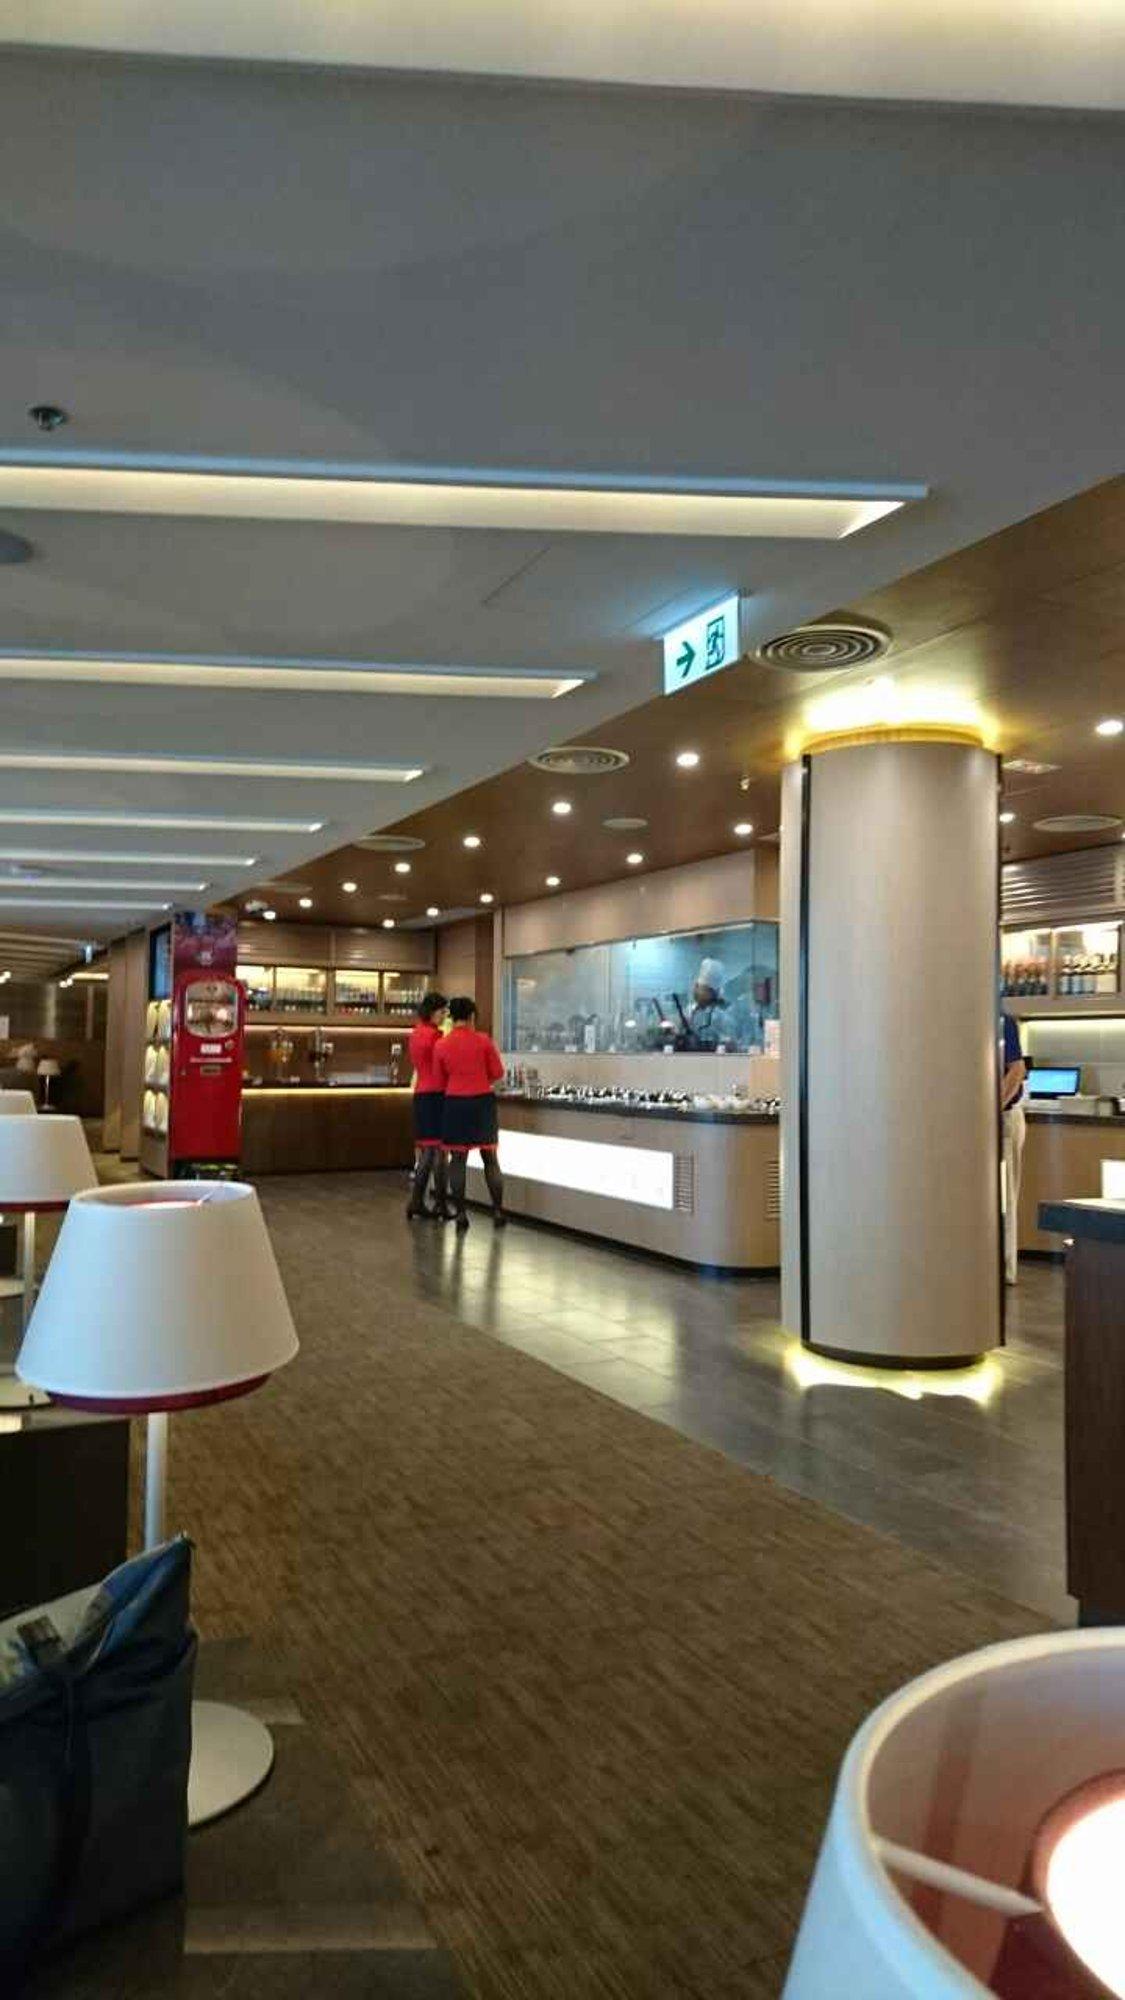 Hong Kong Airlines VIP Lounge (Club Bauhinia) image 16 of 40